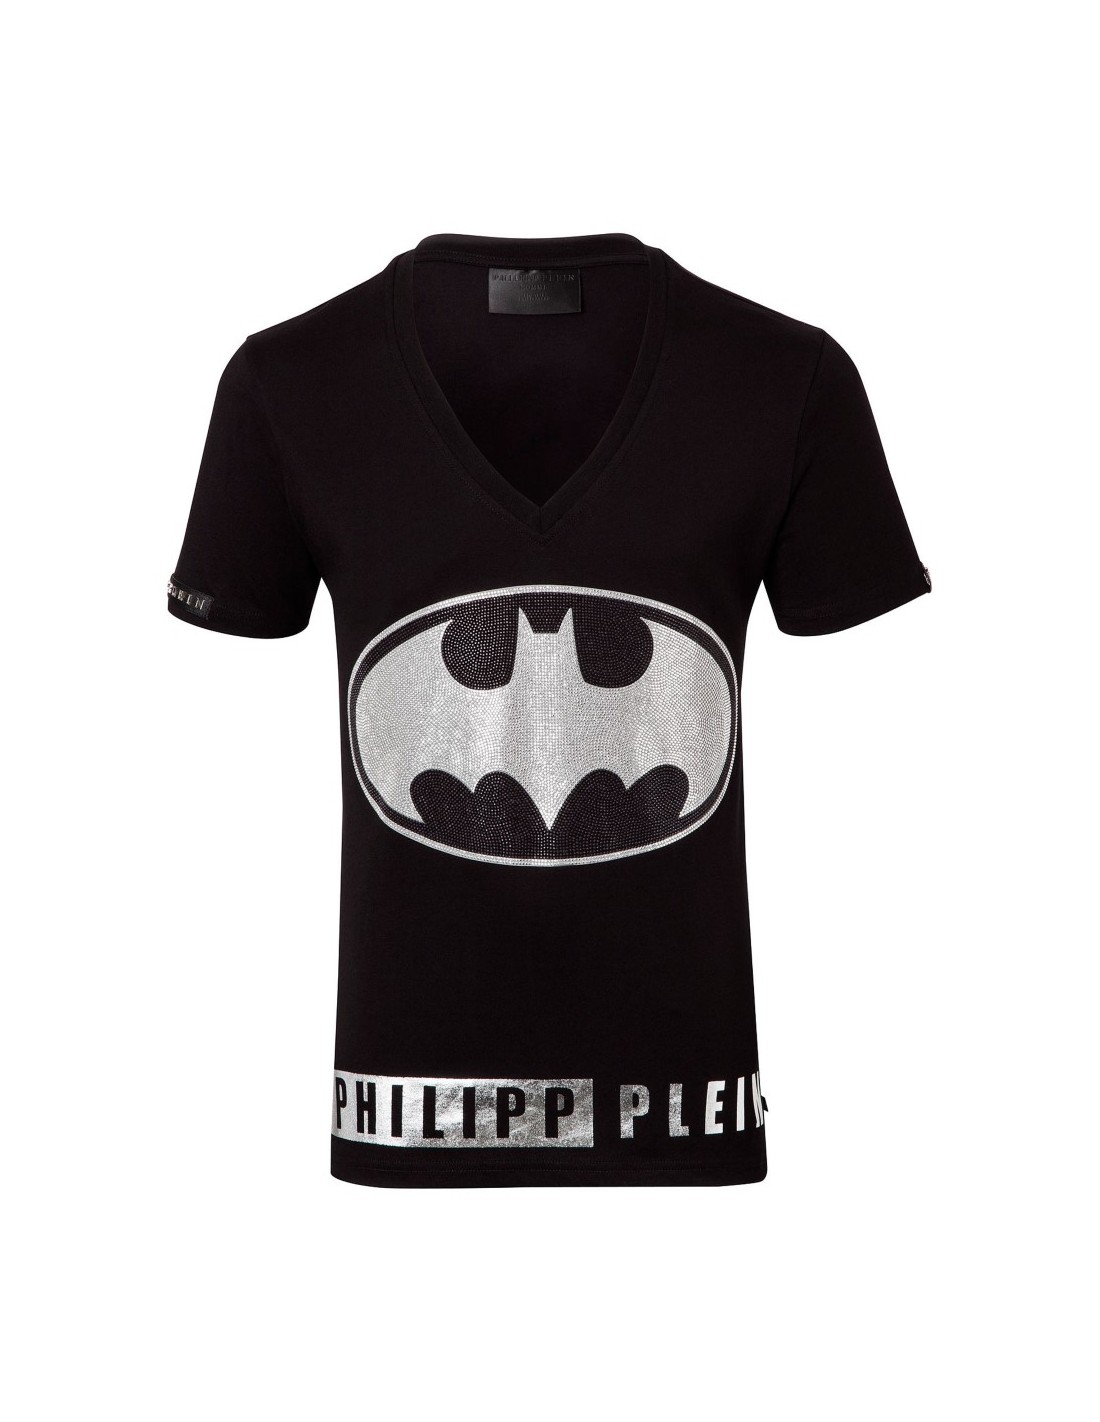 Philipp Plein T-shirt The Savage Batman at altamoda.shop